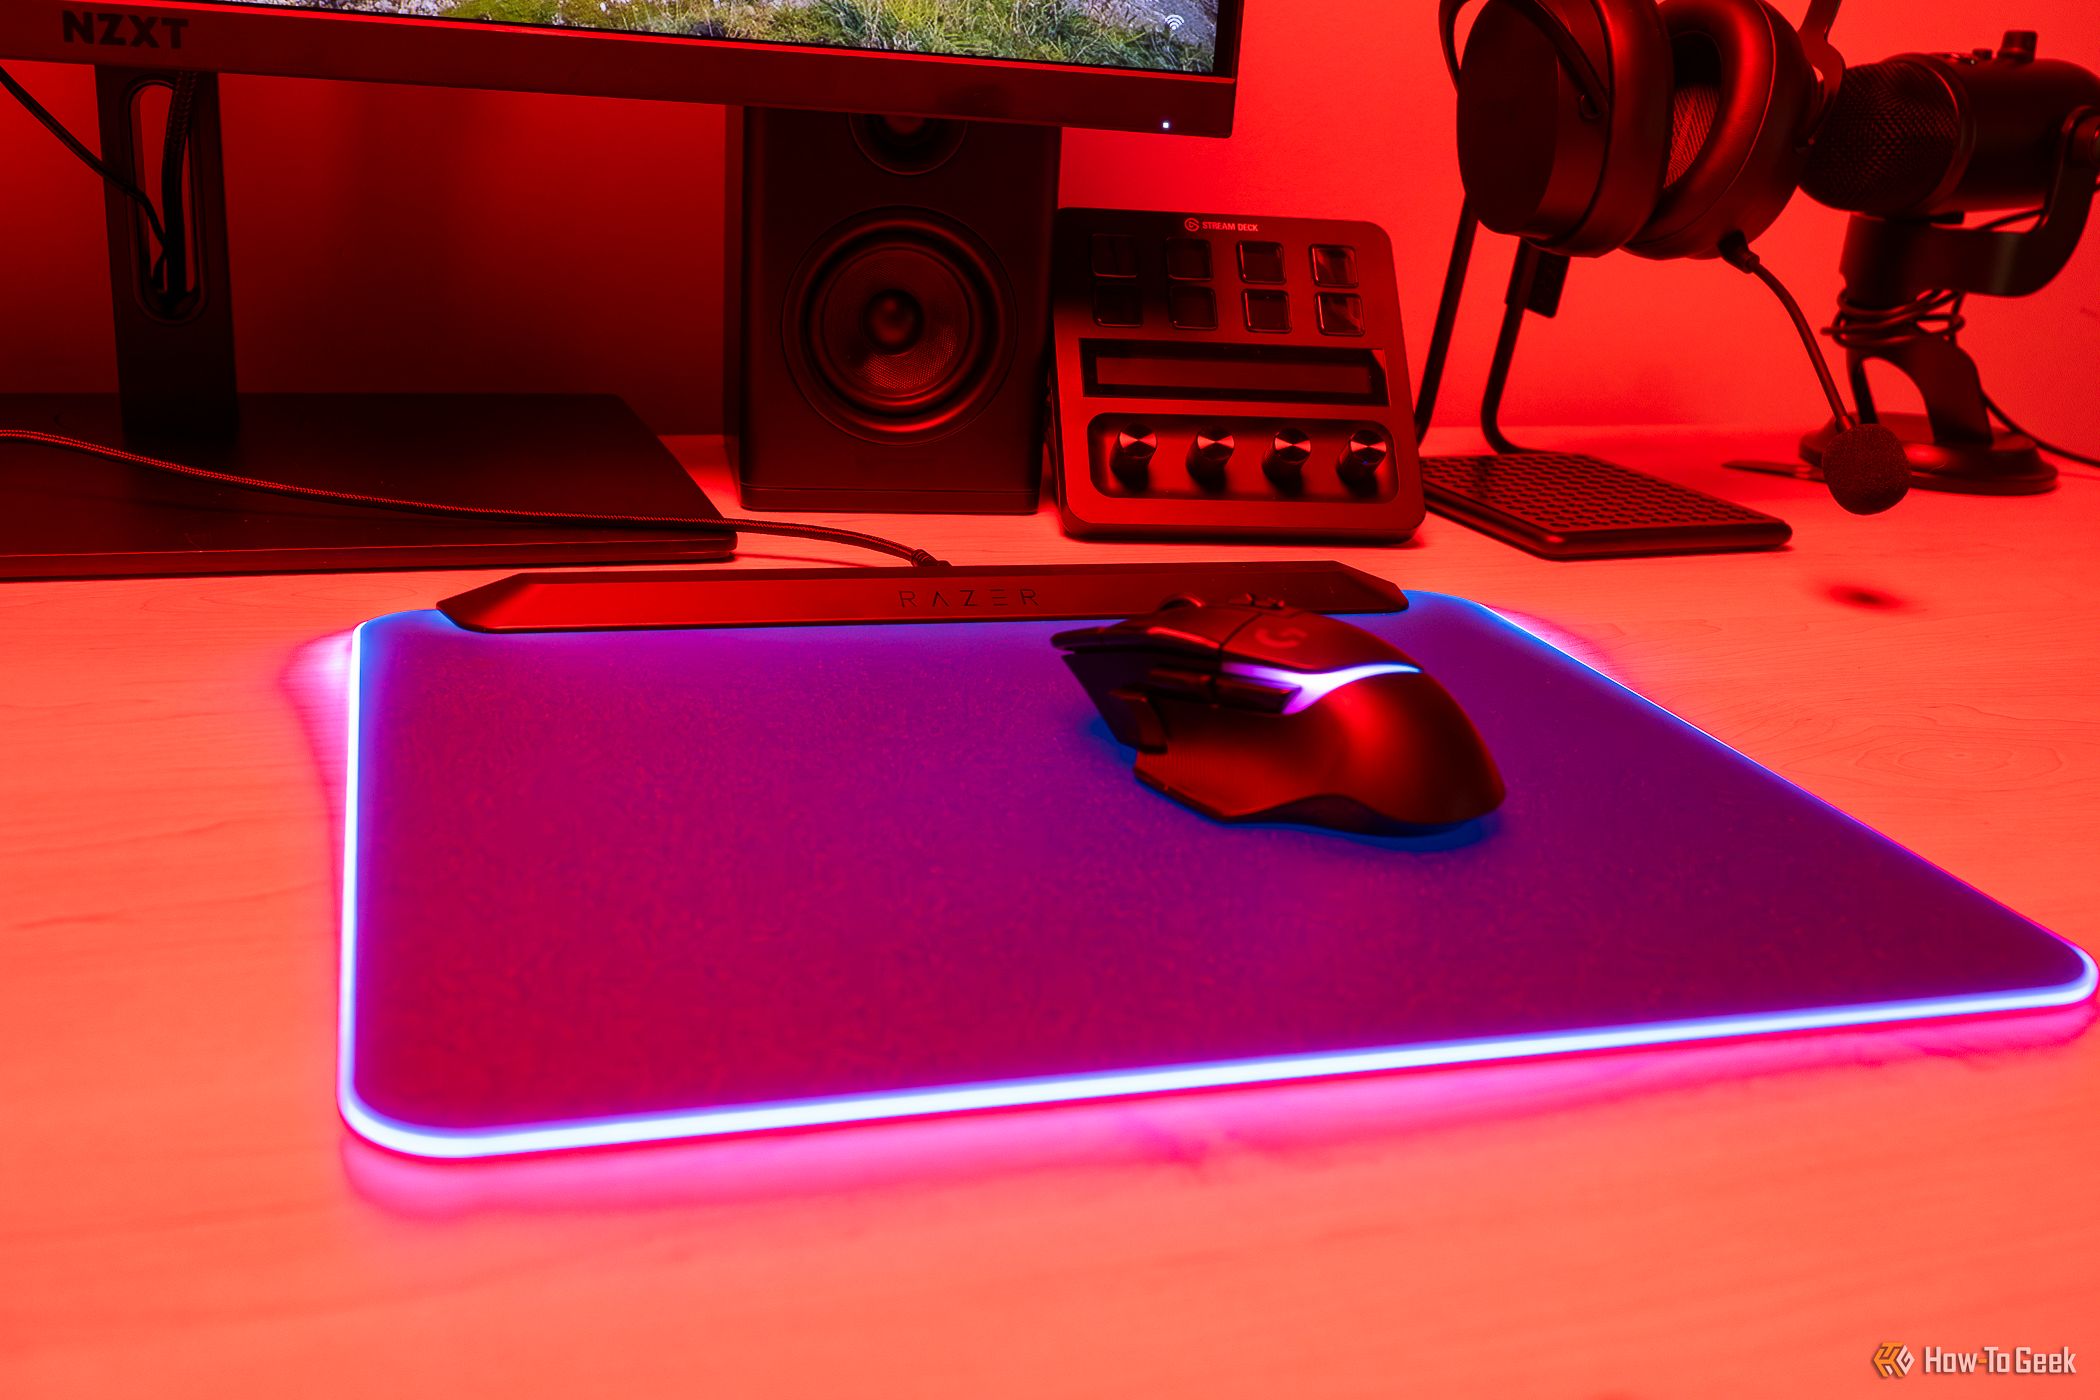 A Razer Firefly V2 Pro gaming mouse on a light-up mouse pad.